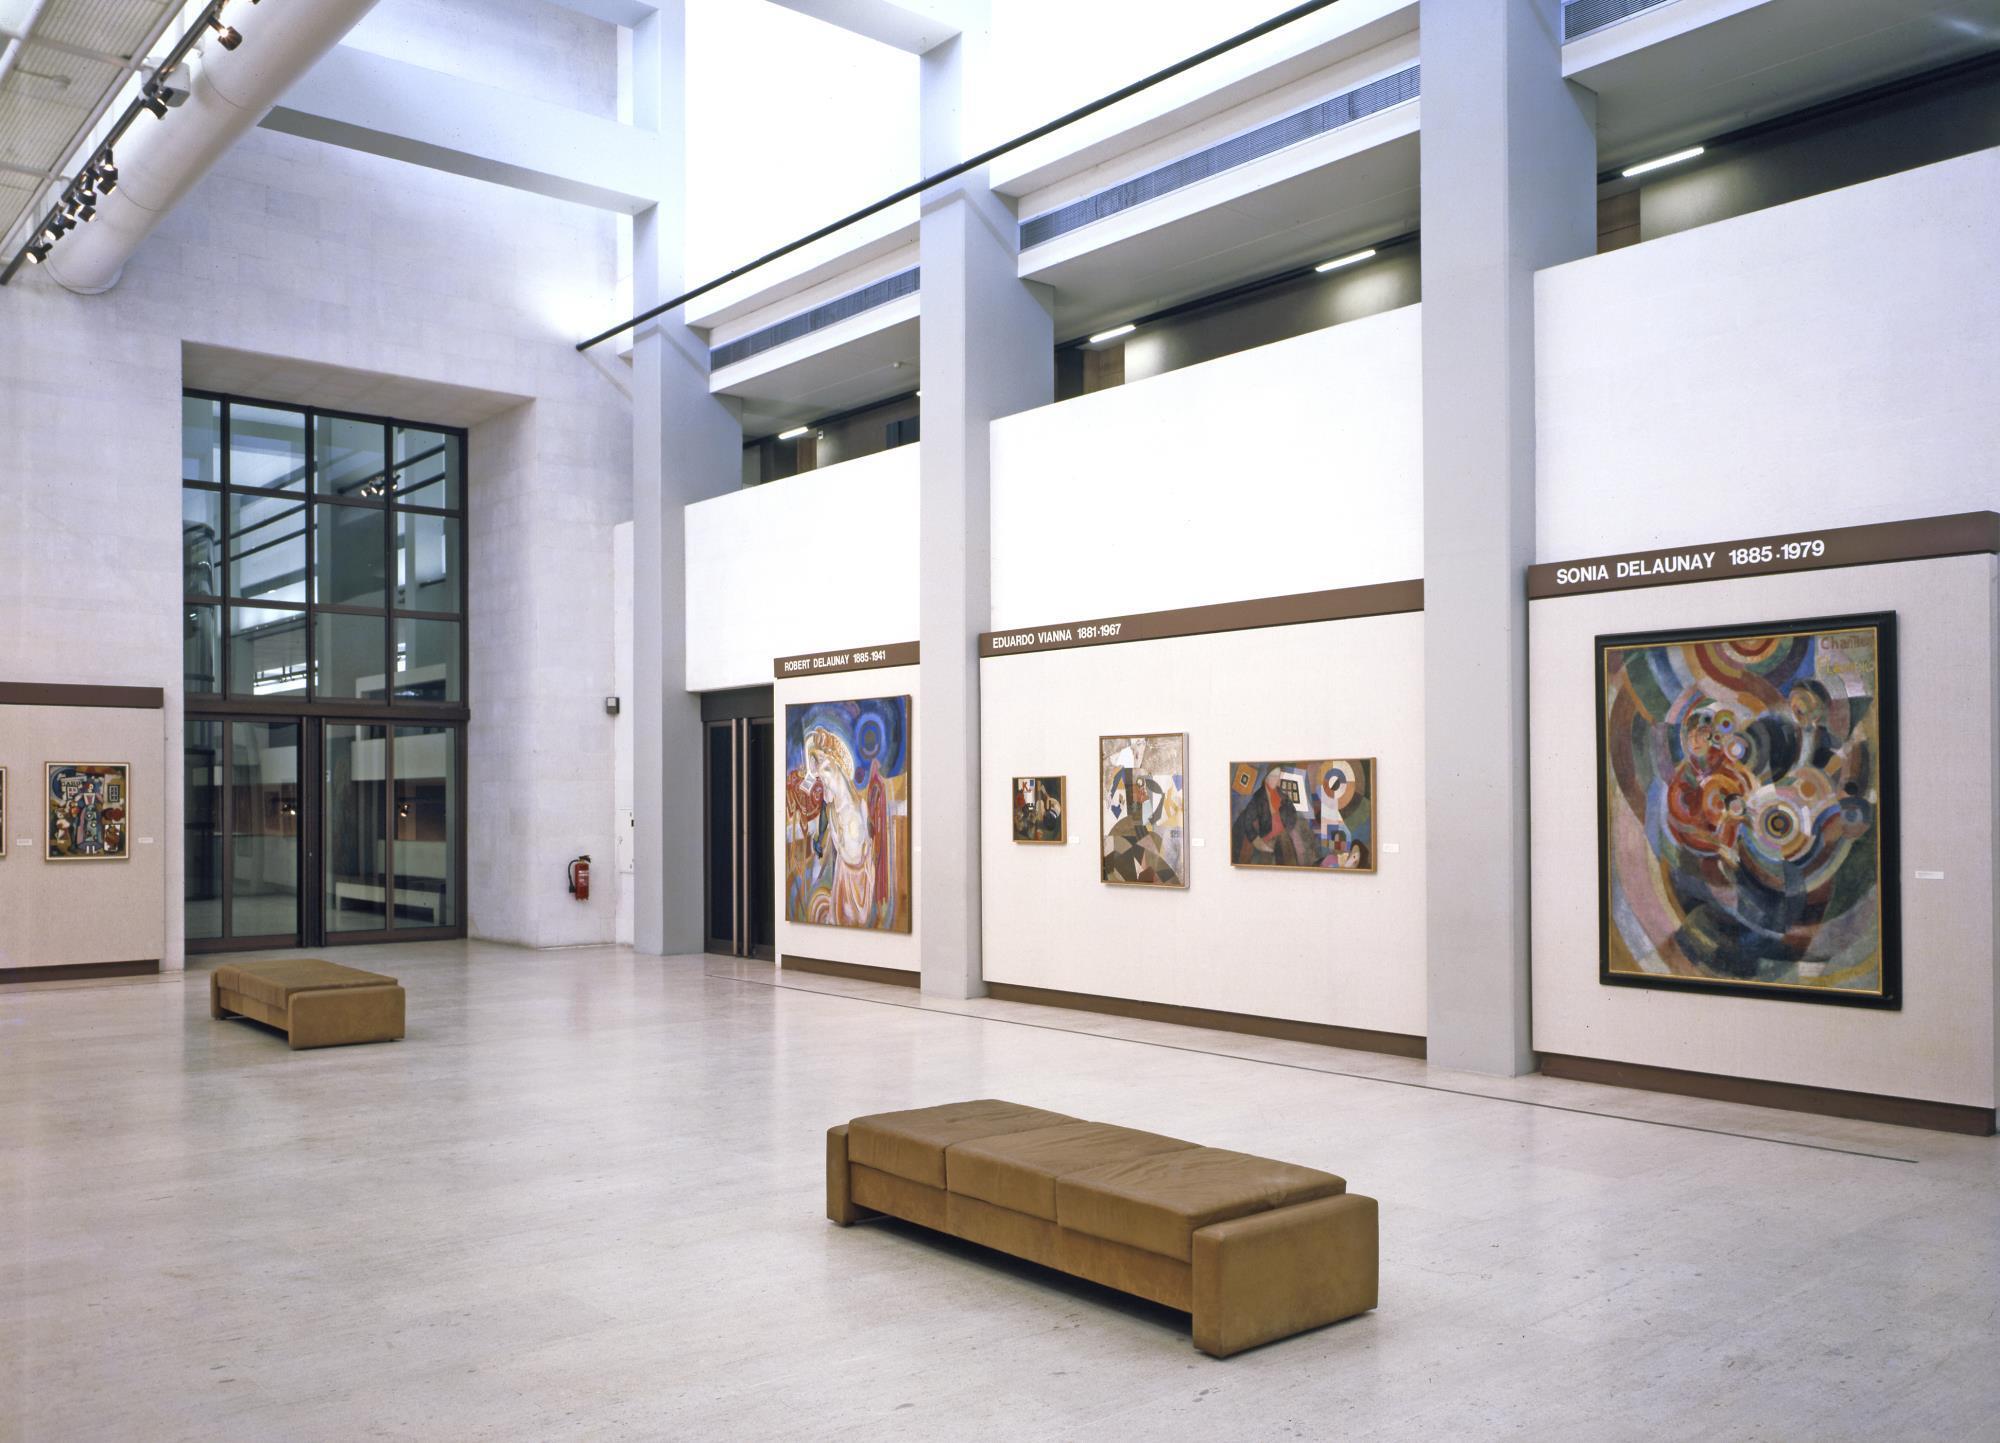 Obras de Sonia Delaunay, Eduardo Viana e Robert Delaunay